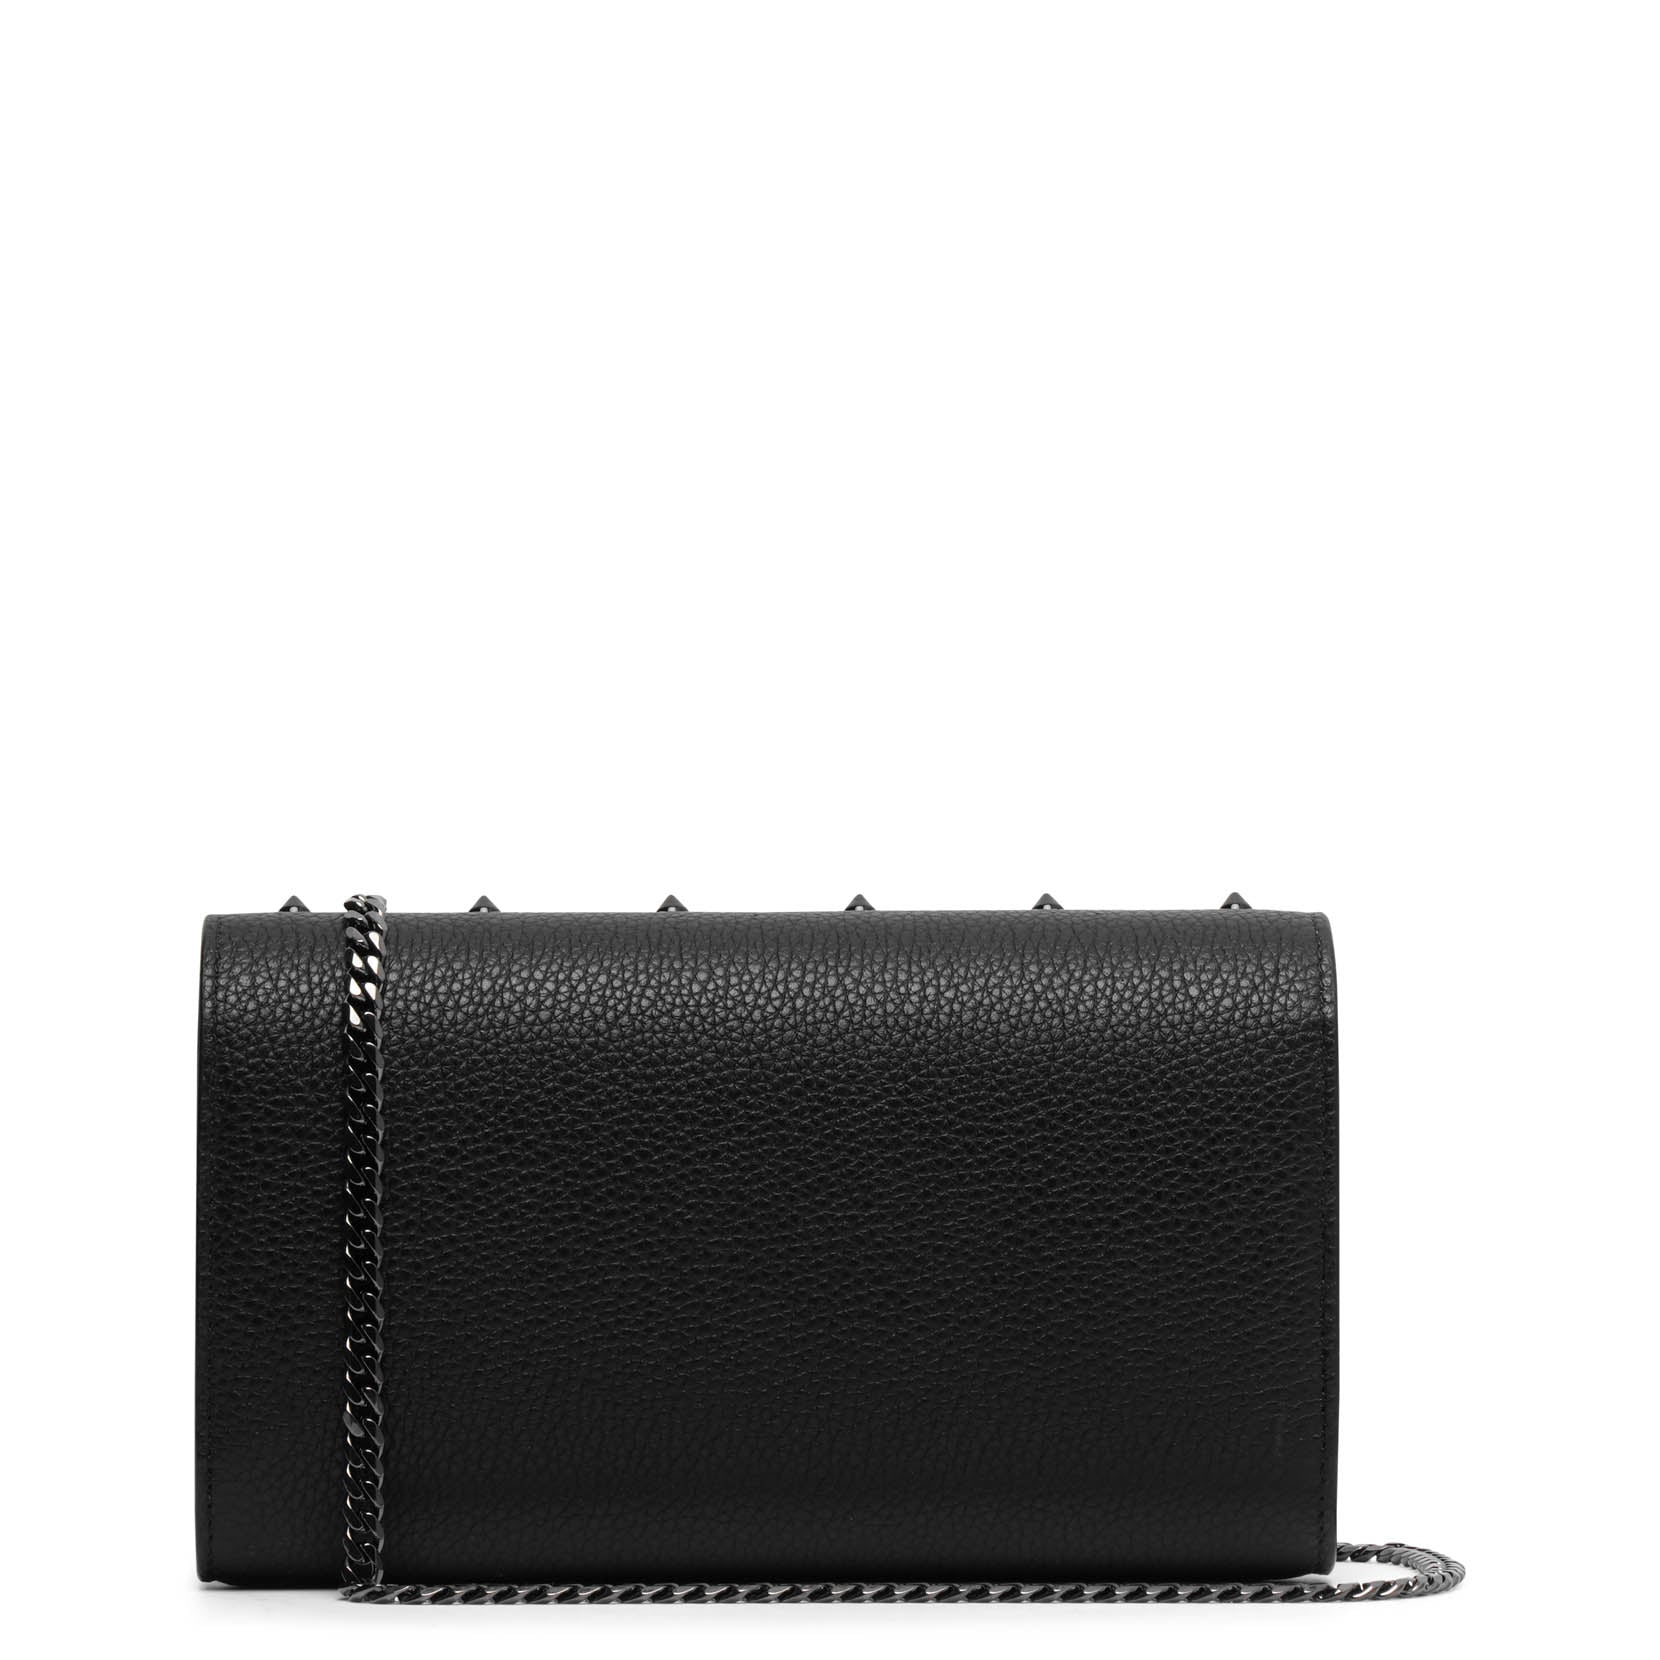 Paloma loubinthesky black wallet on chain